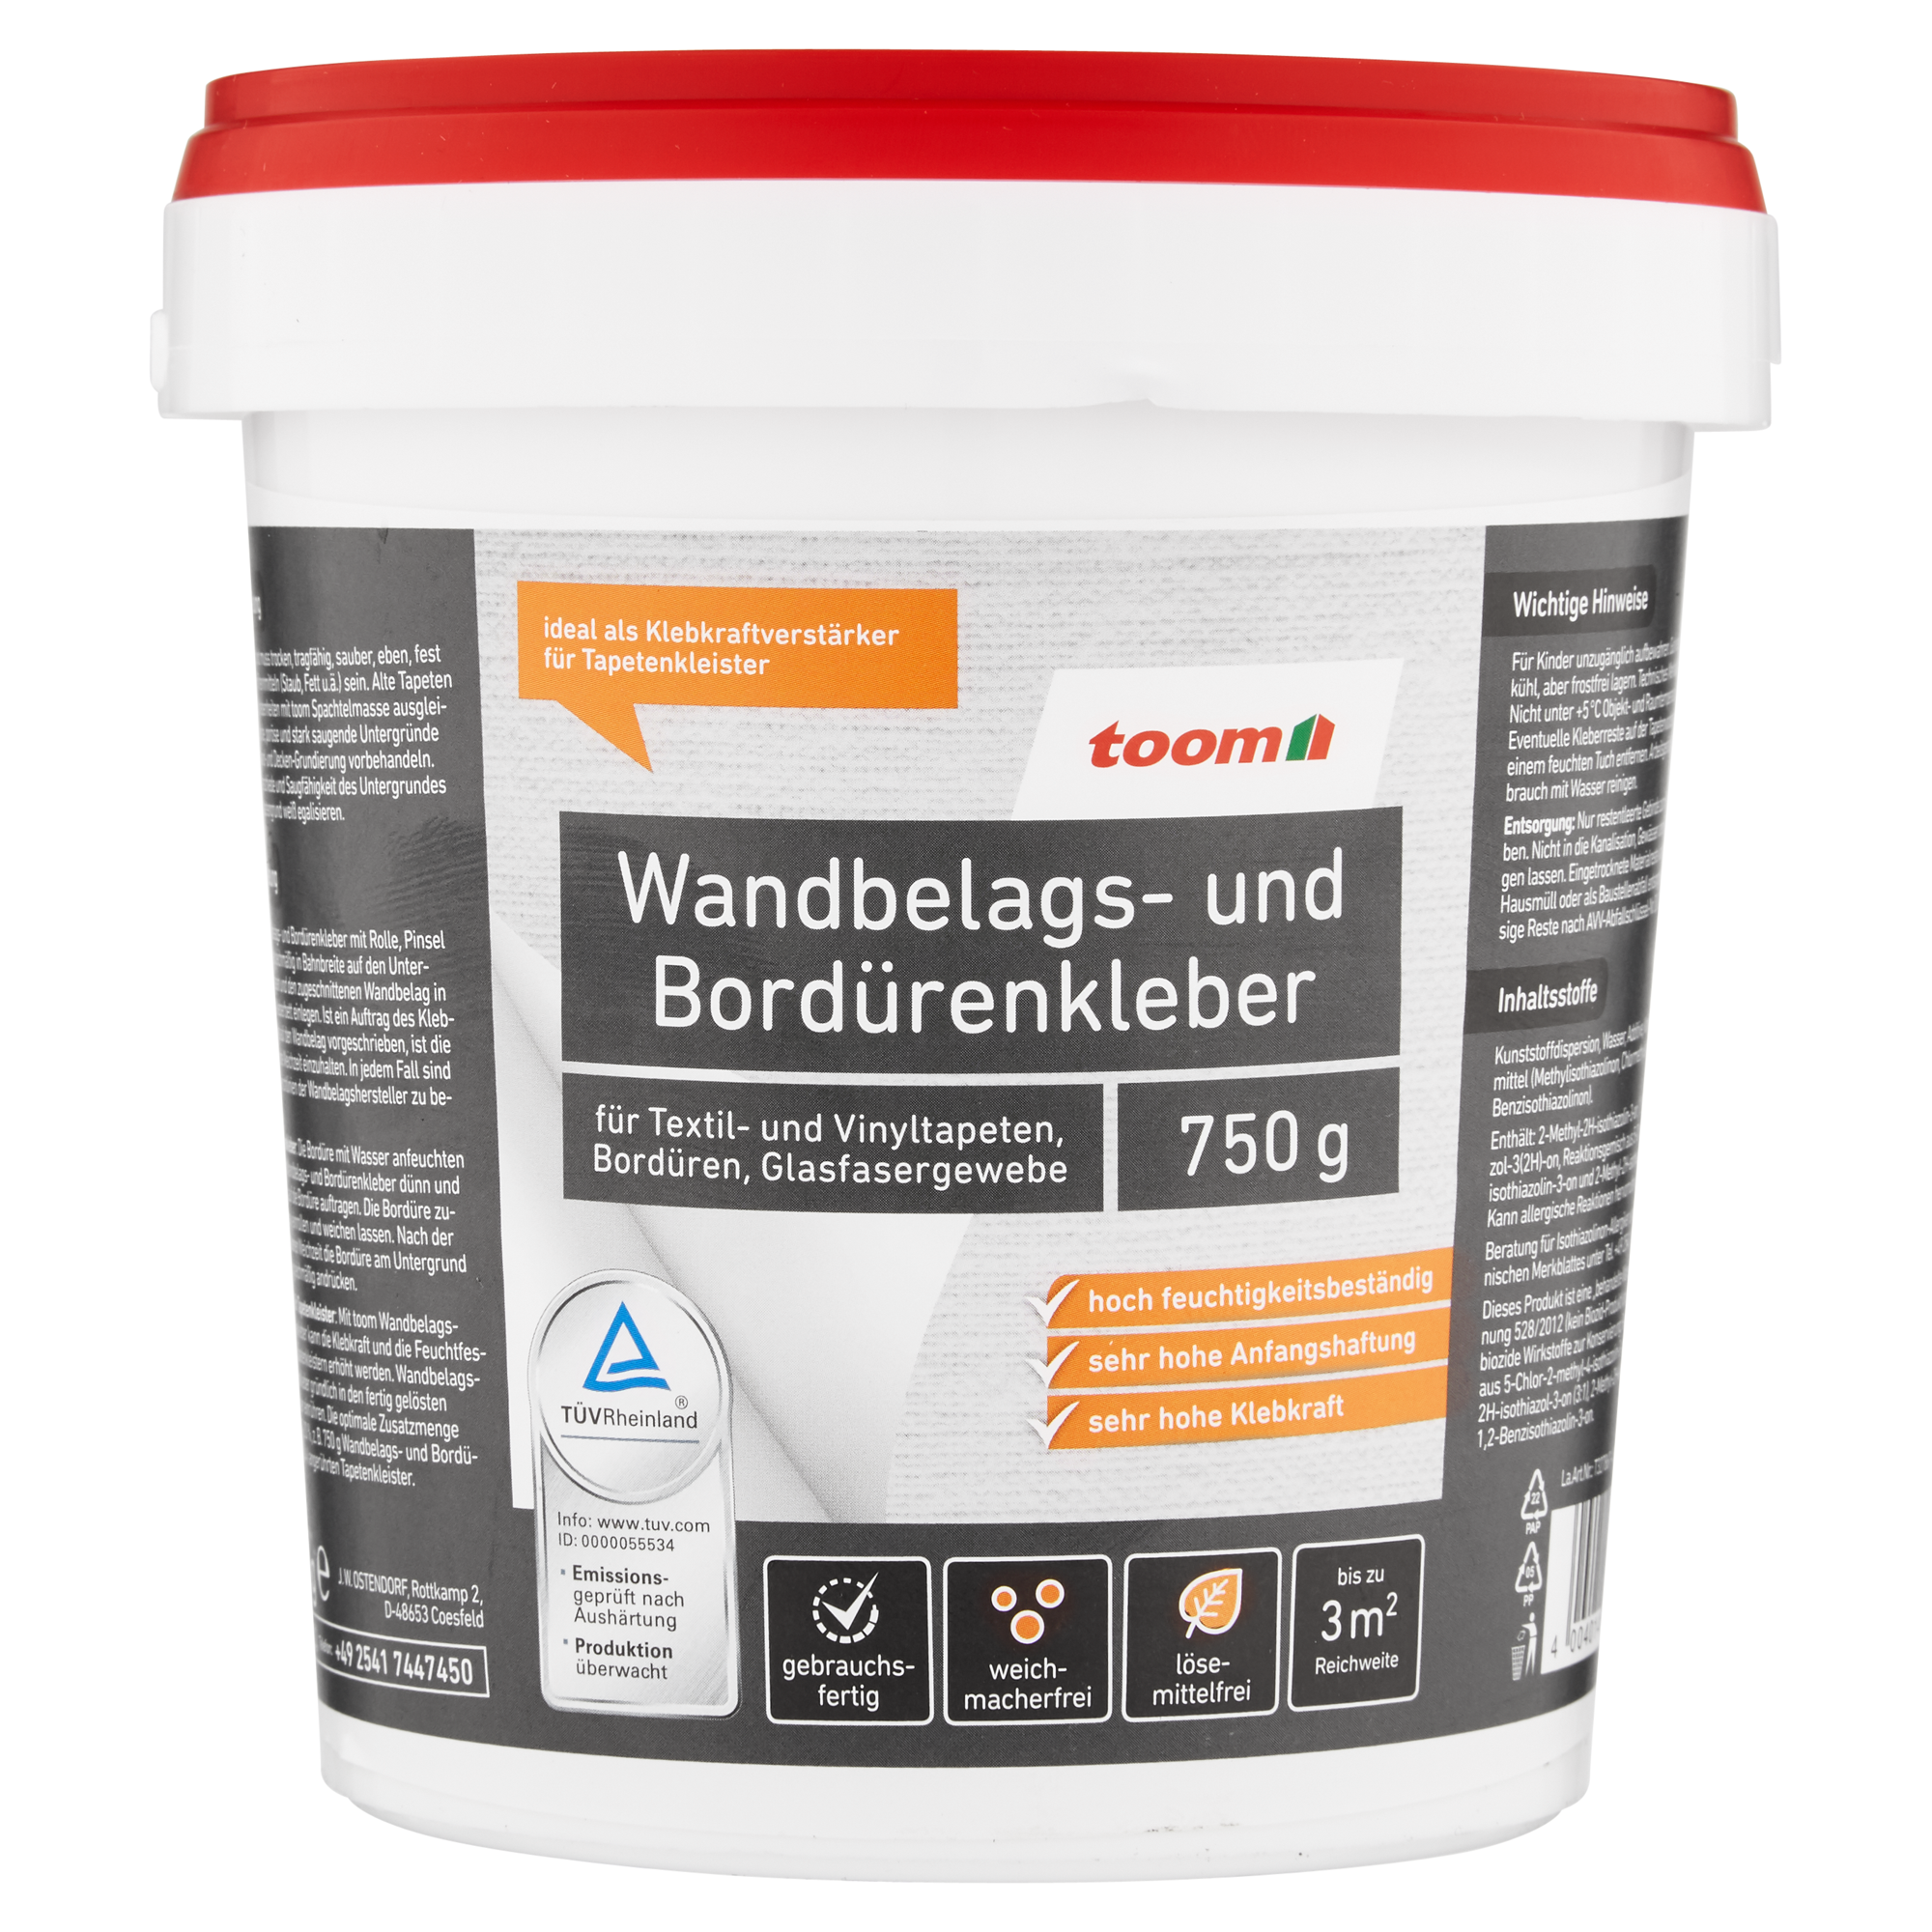 Wandbelags- und Bordürenkleber weiß 750 g + product picture